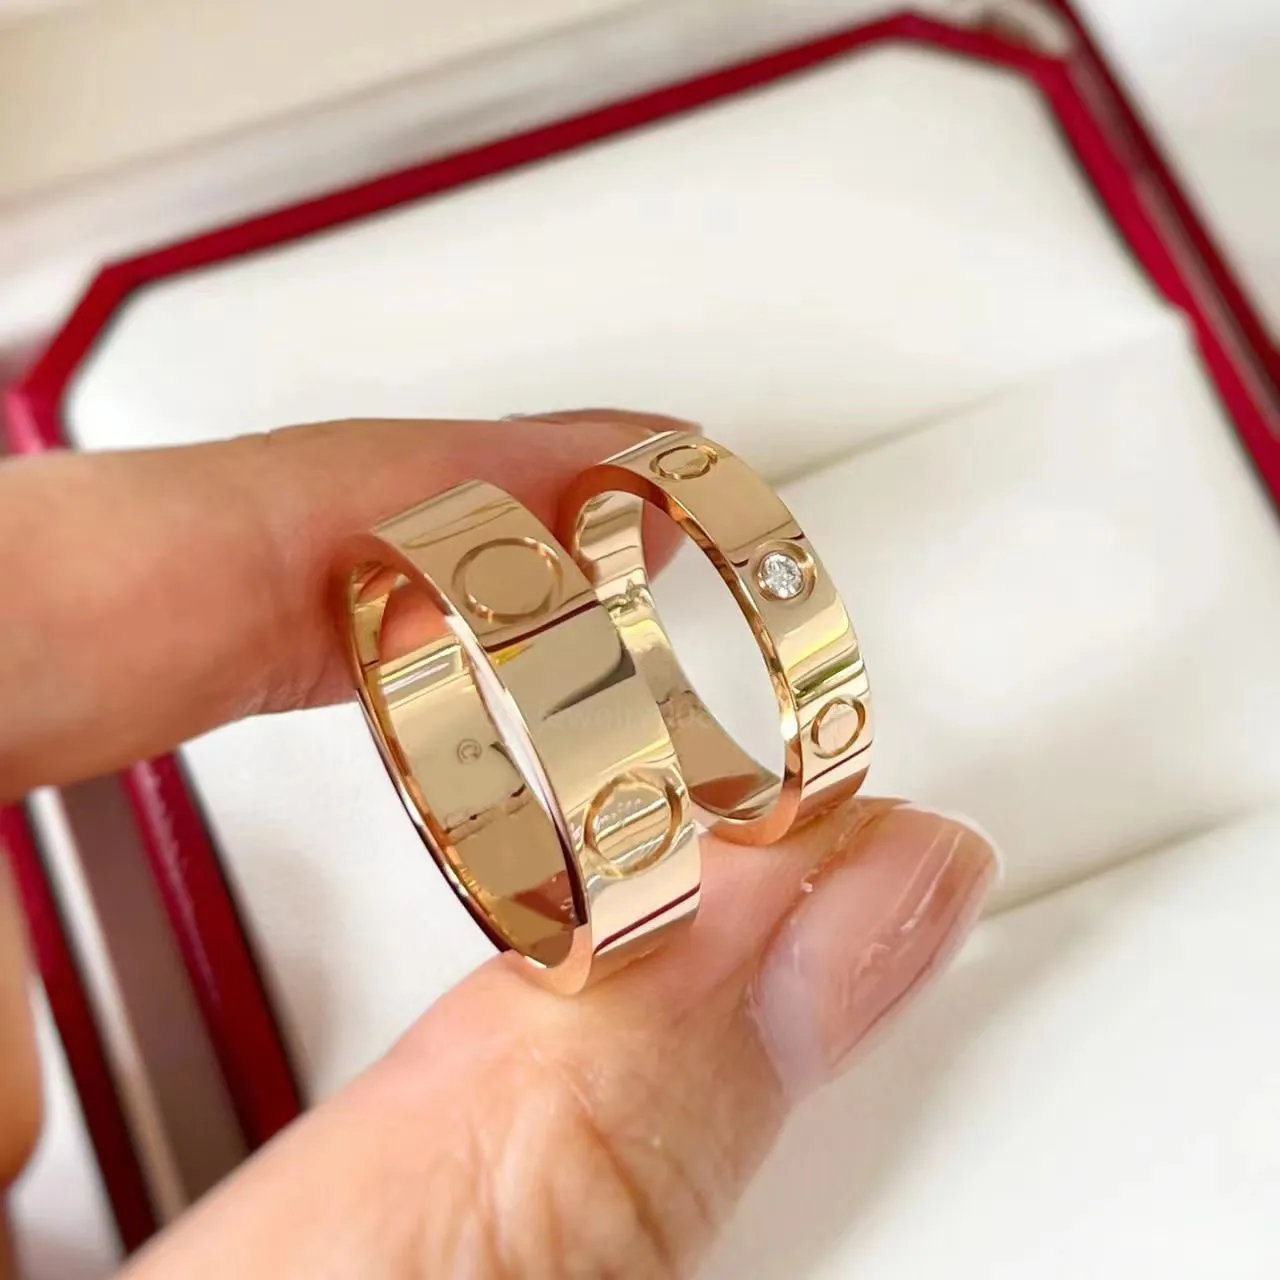 Cassic Designer Rings Women V-GOLD God Pated CZ Diamond Ove Ring High Poished Origina Branded 4/6mm Mens Jewery Woman Vanenites Day Gift for